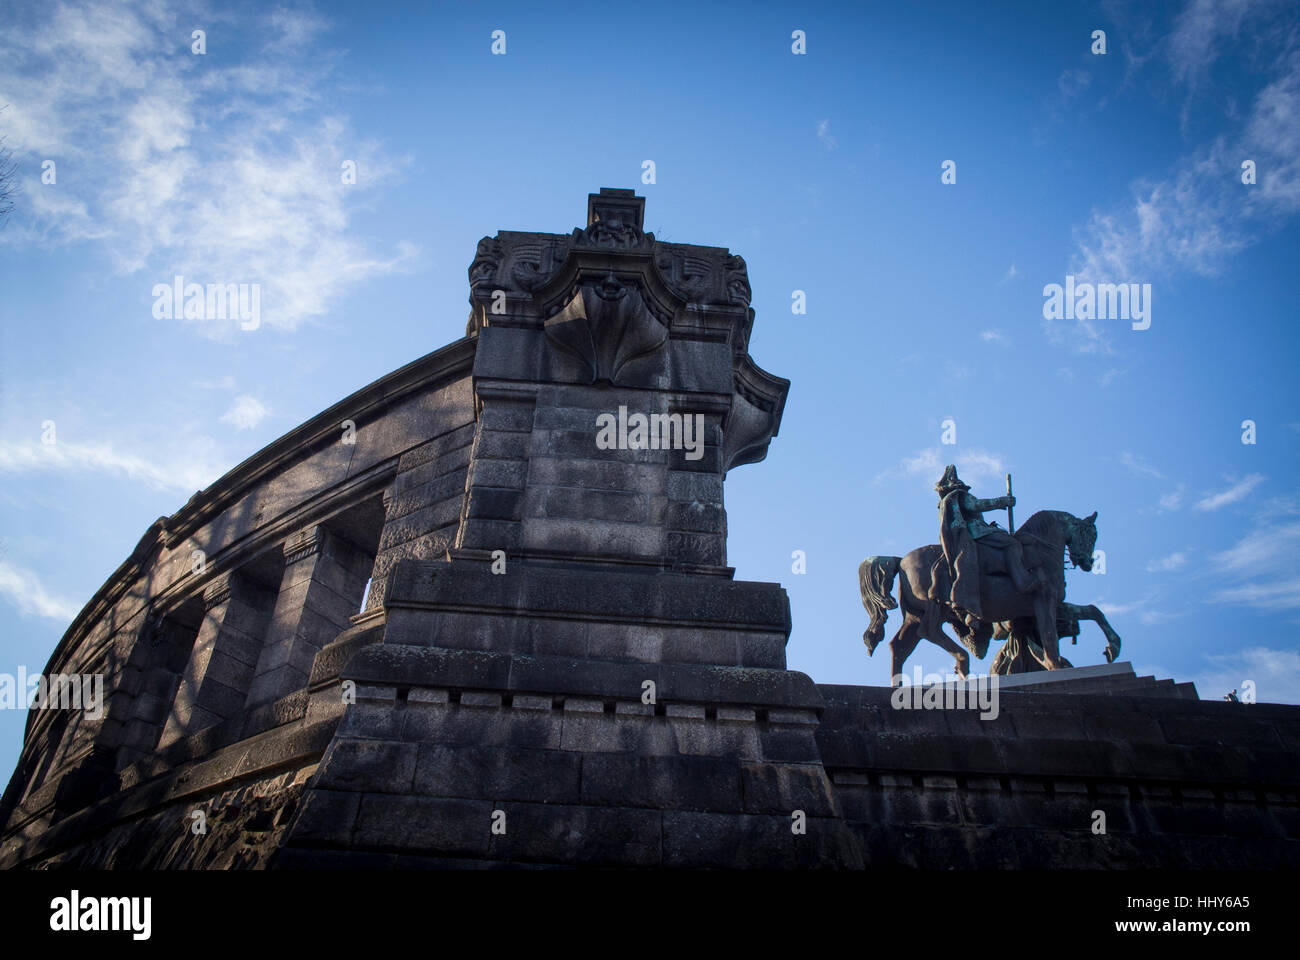 Statue of Kaiser Wilhelm 1st in Koblenz, Germany. Stock Photo